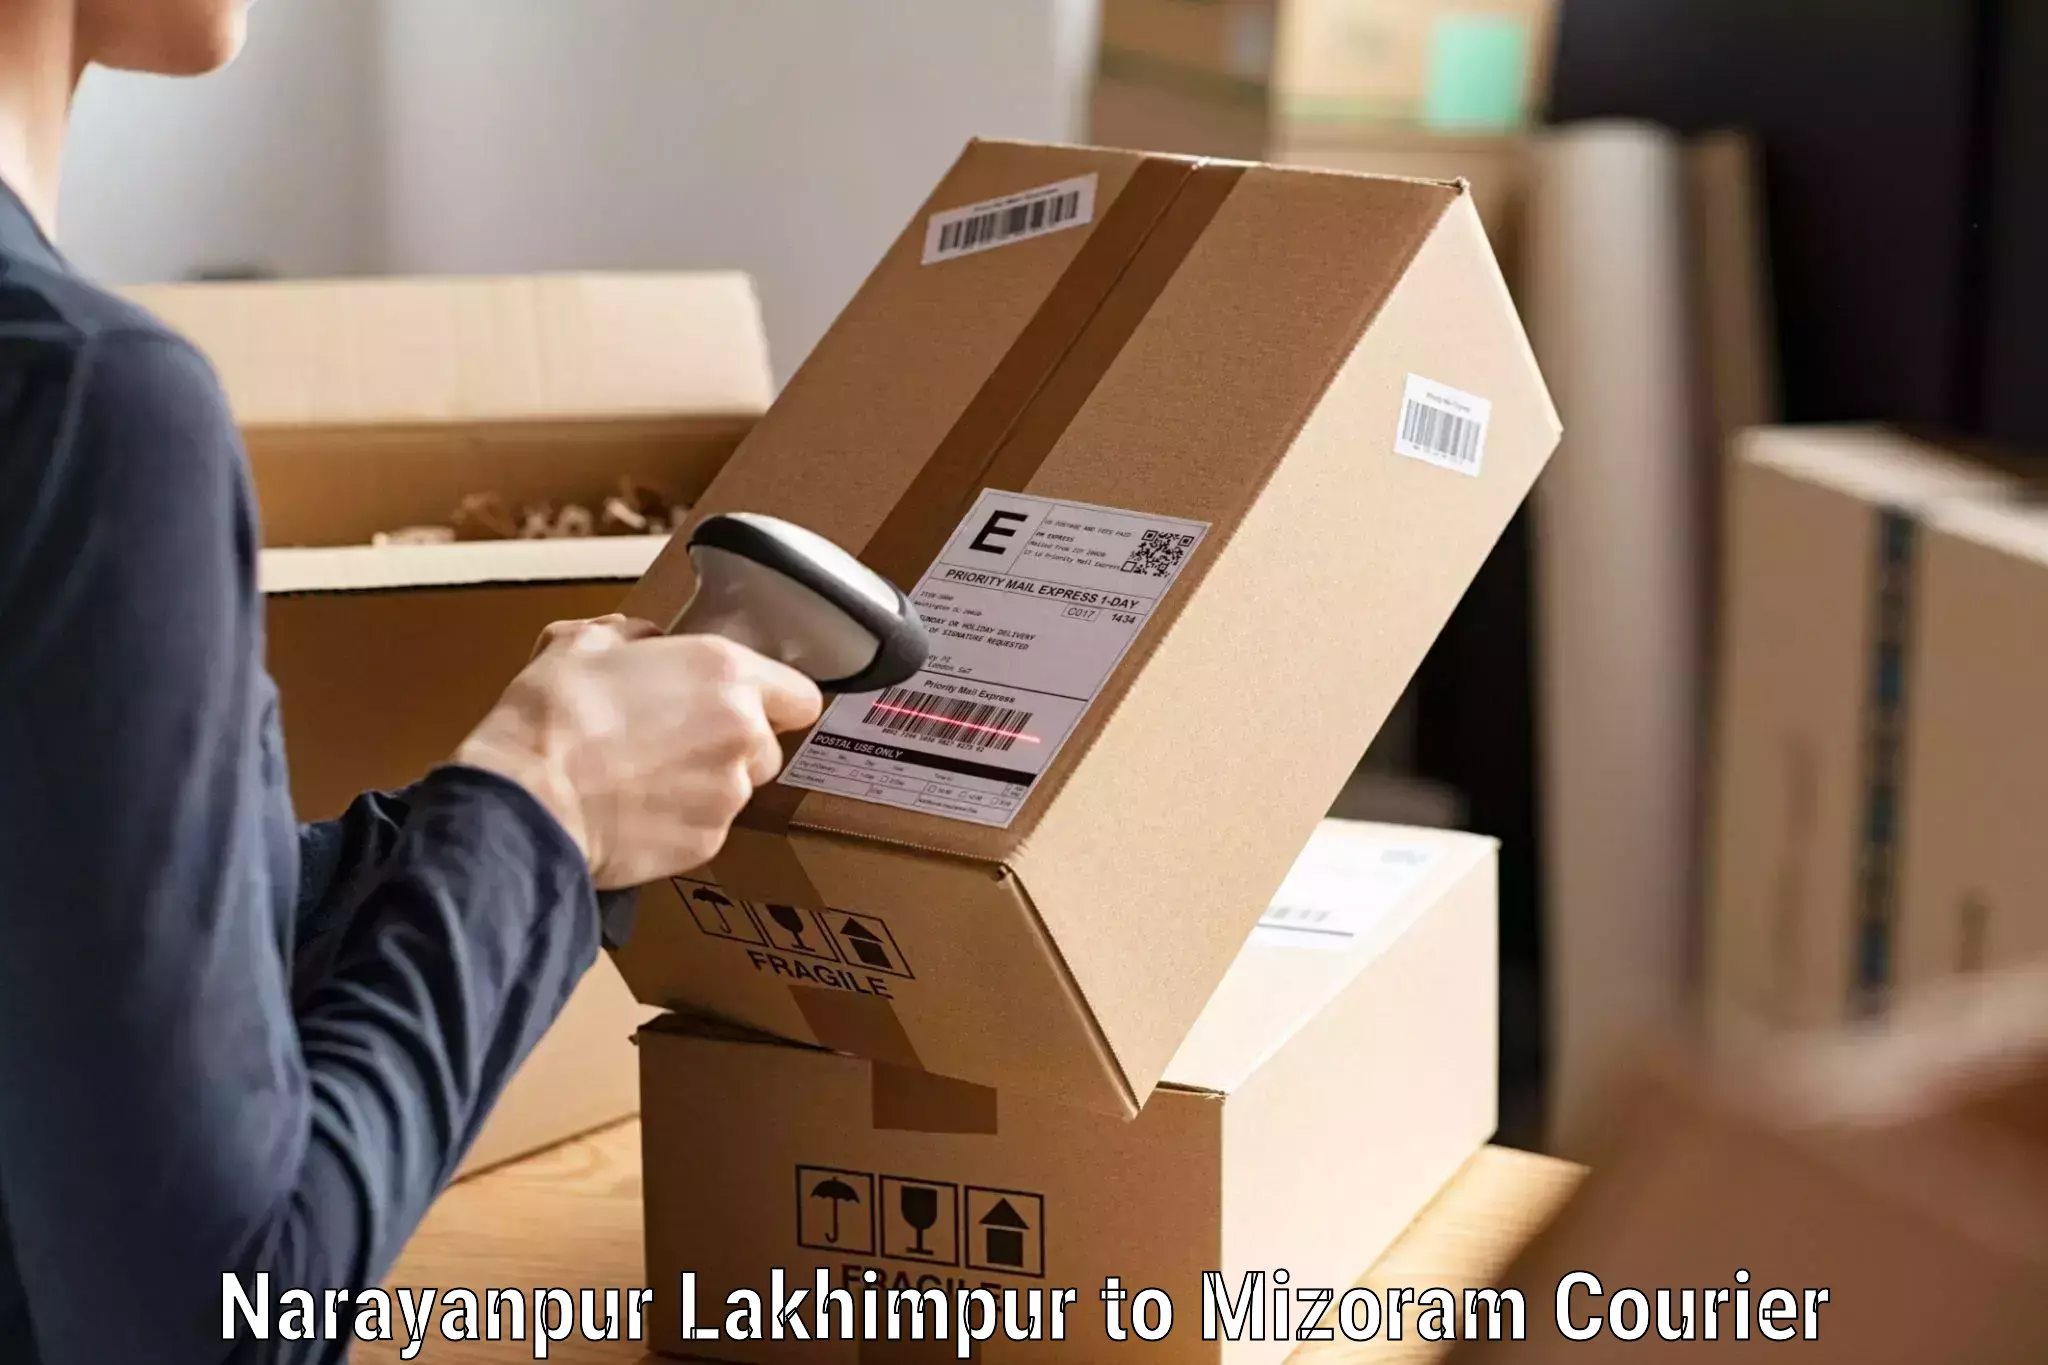 International parcel service Narayanpur Lakhimpur to Lawngtlai